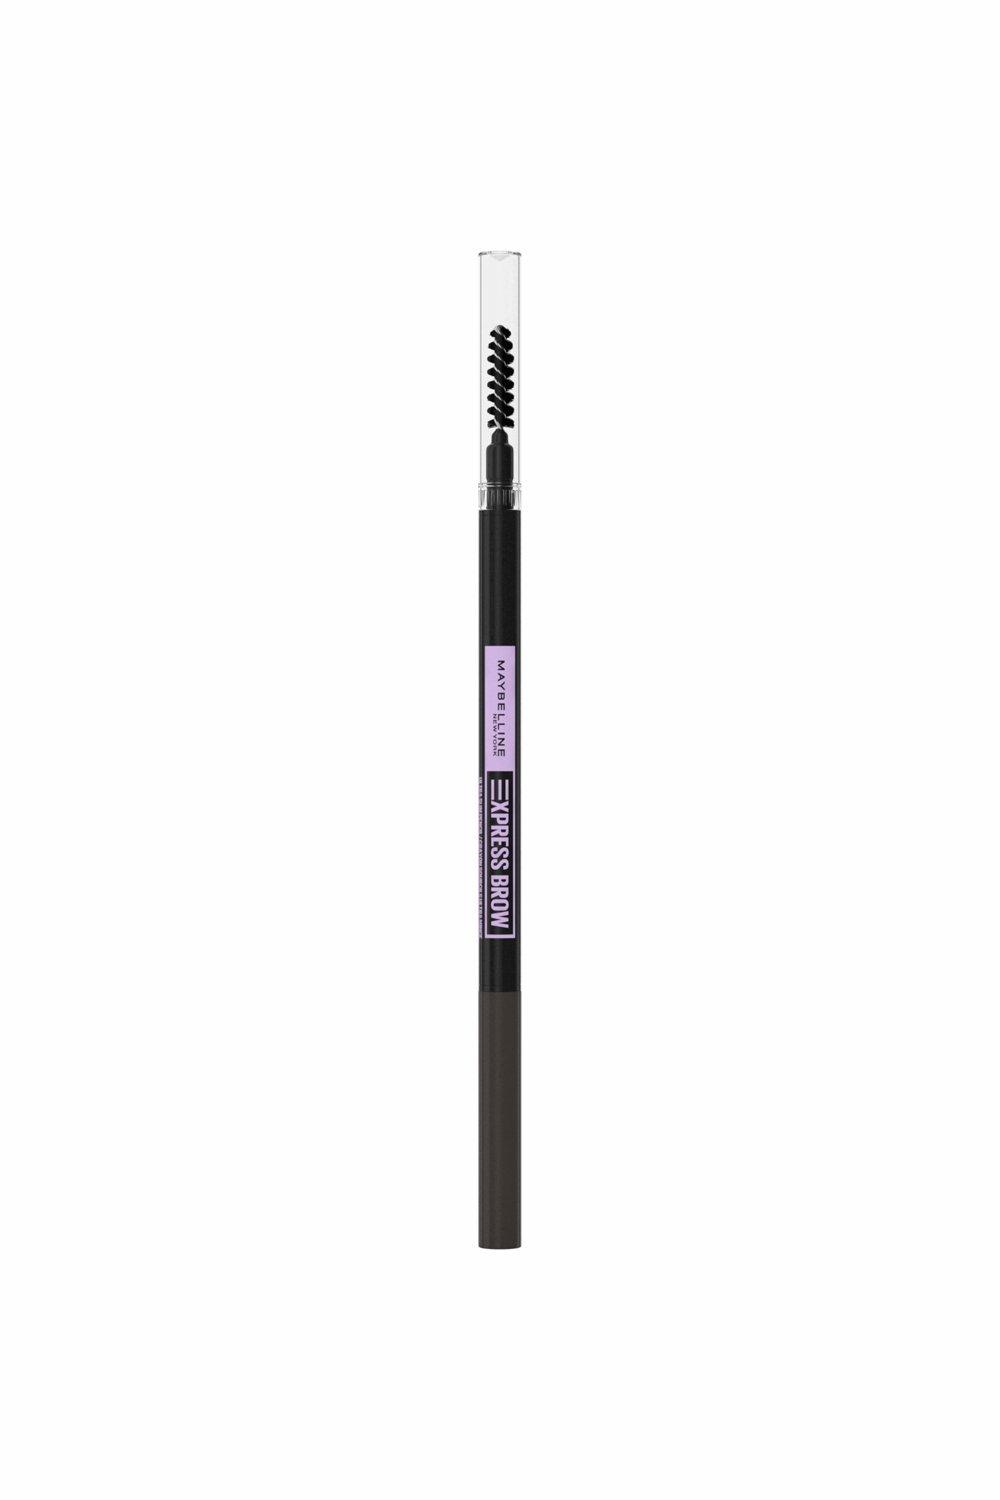 Express Brow Ultra Slim Defining Natural Fuller Looking Brows Eyebrow Pencil